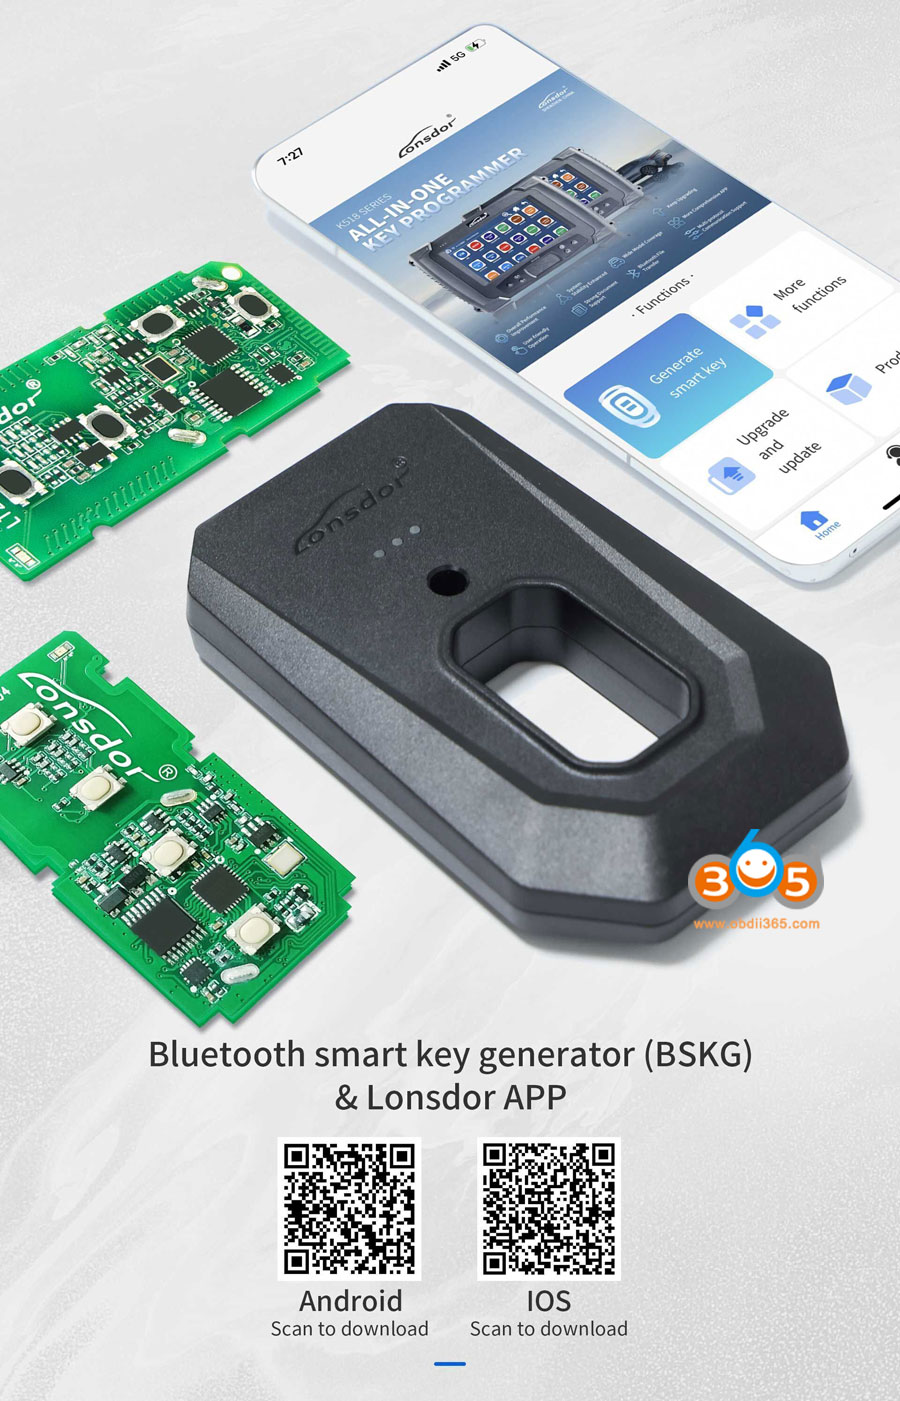 Lonsdor Bluetooth smart key generator